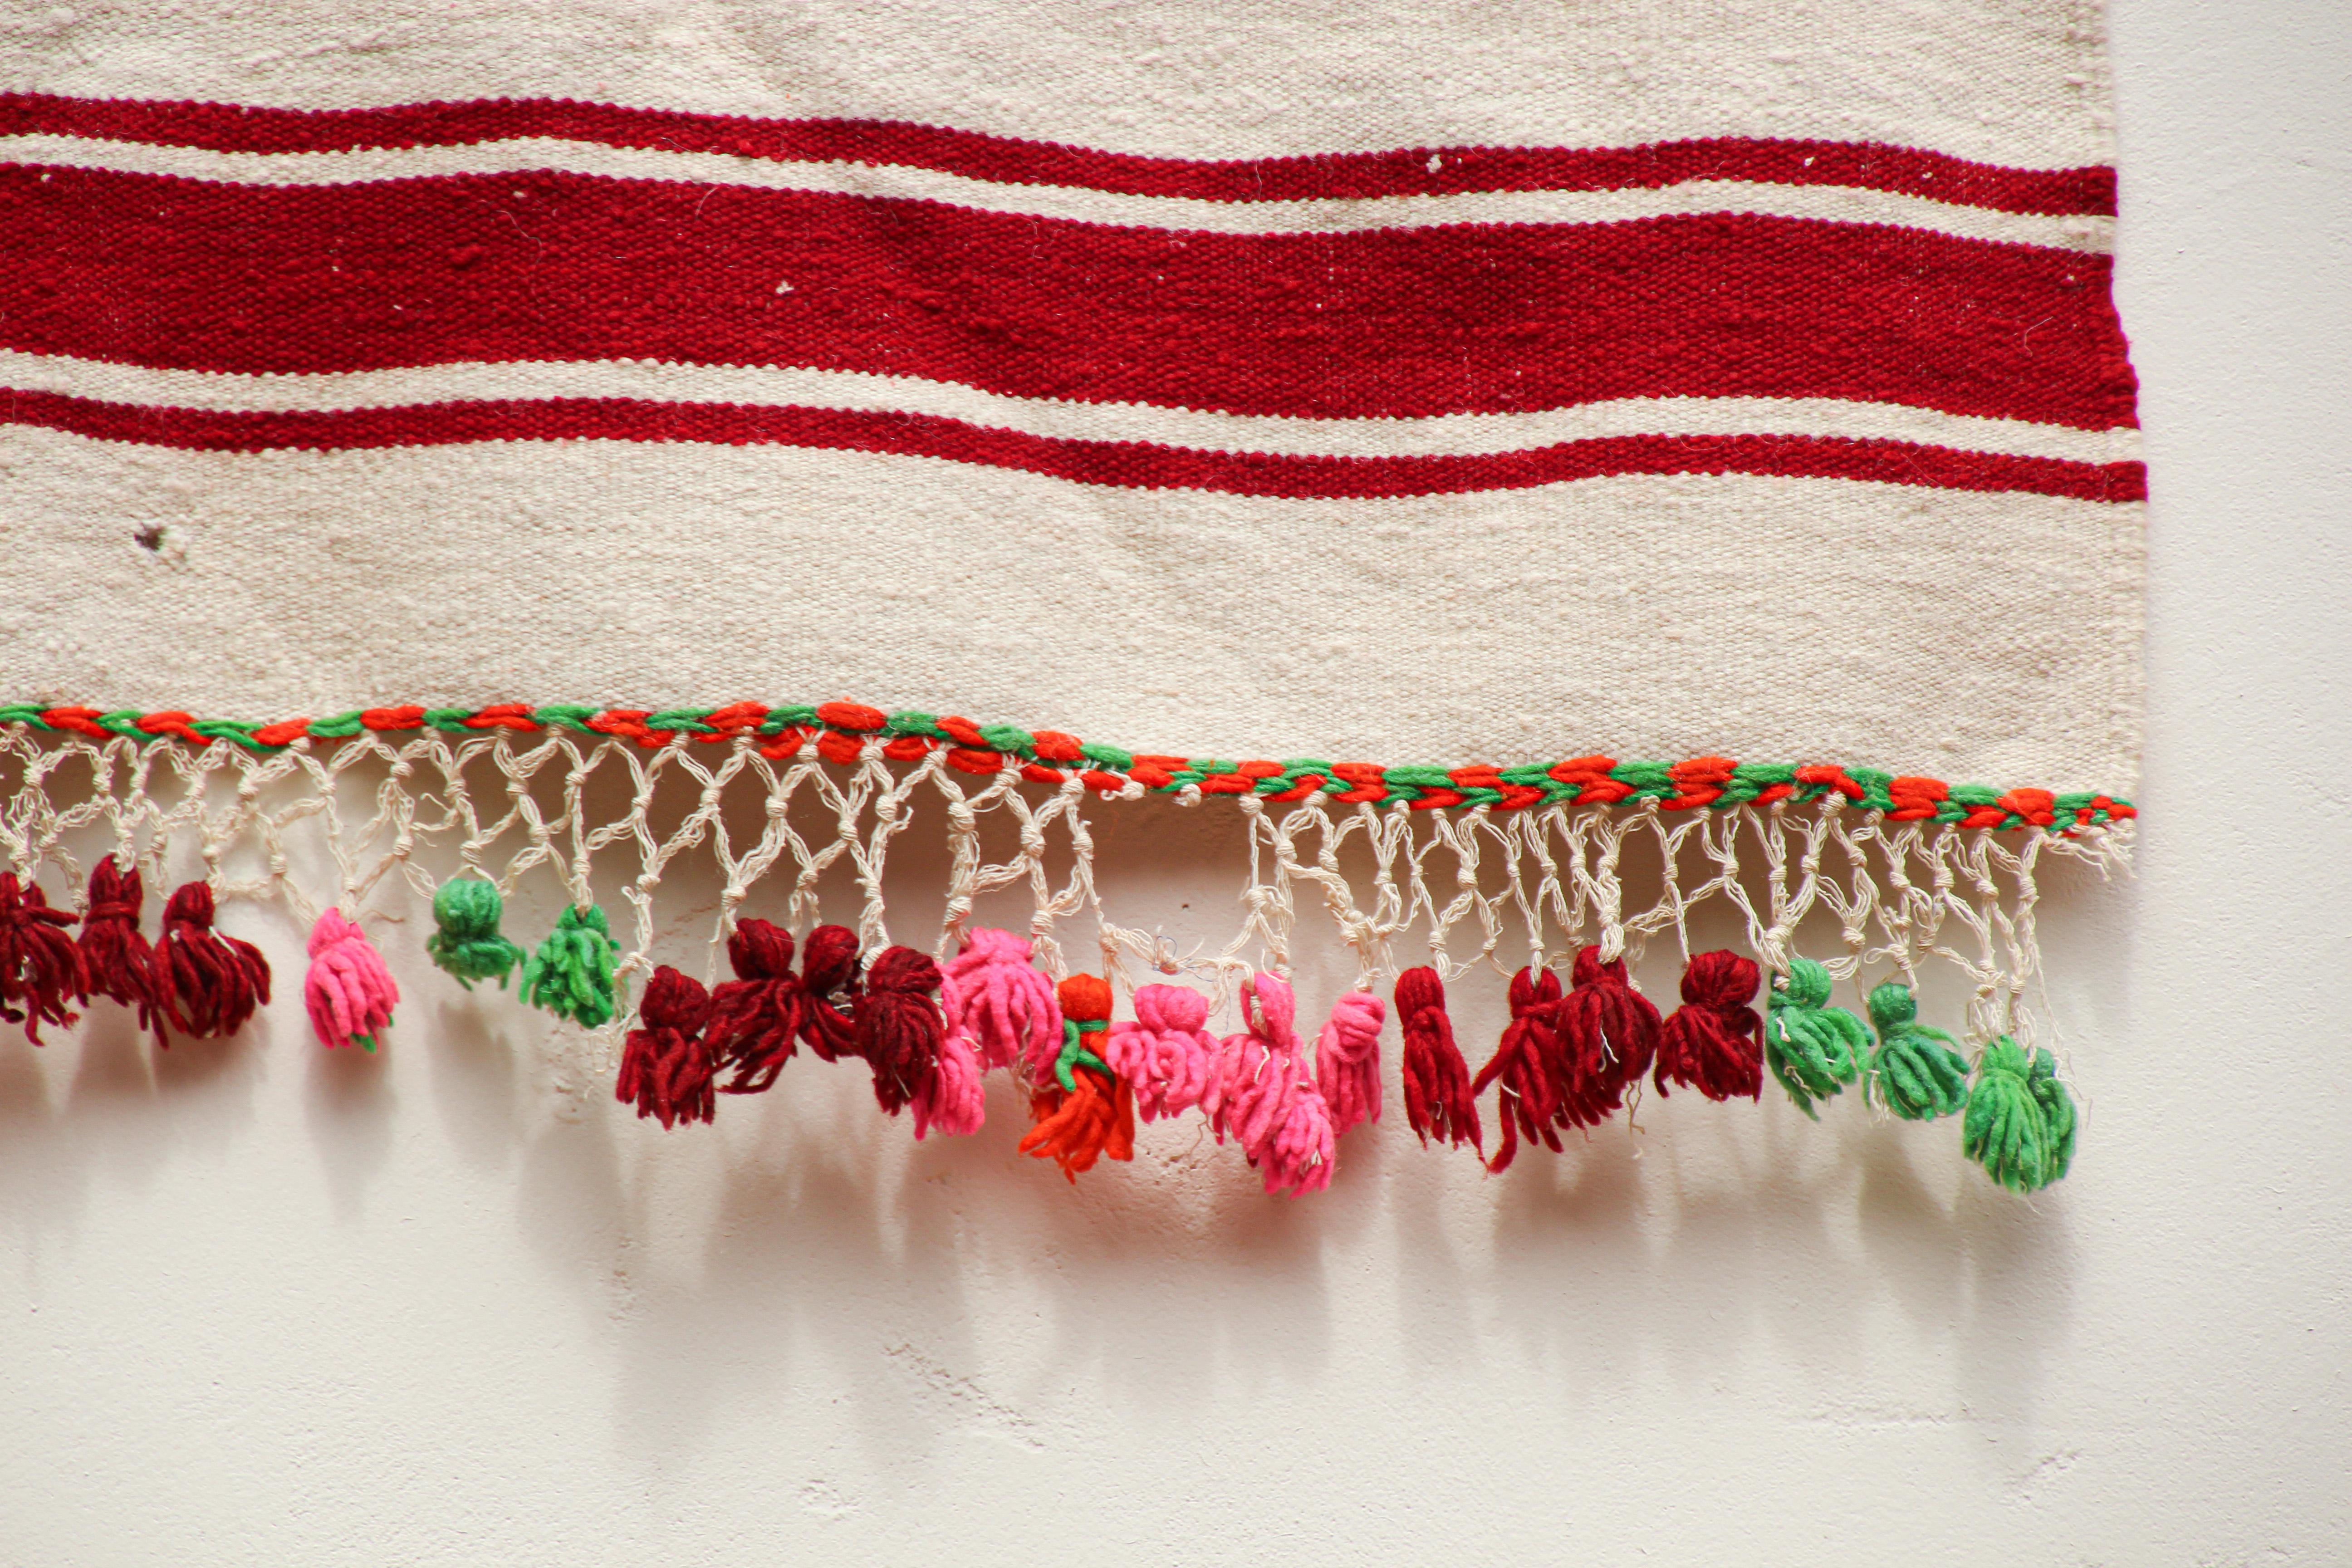 Vintage 1960s Moroccan Flat-Weave Rug, Ethnic Textile Handira For Sale 12